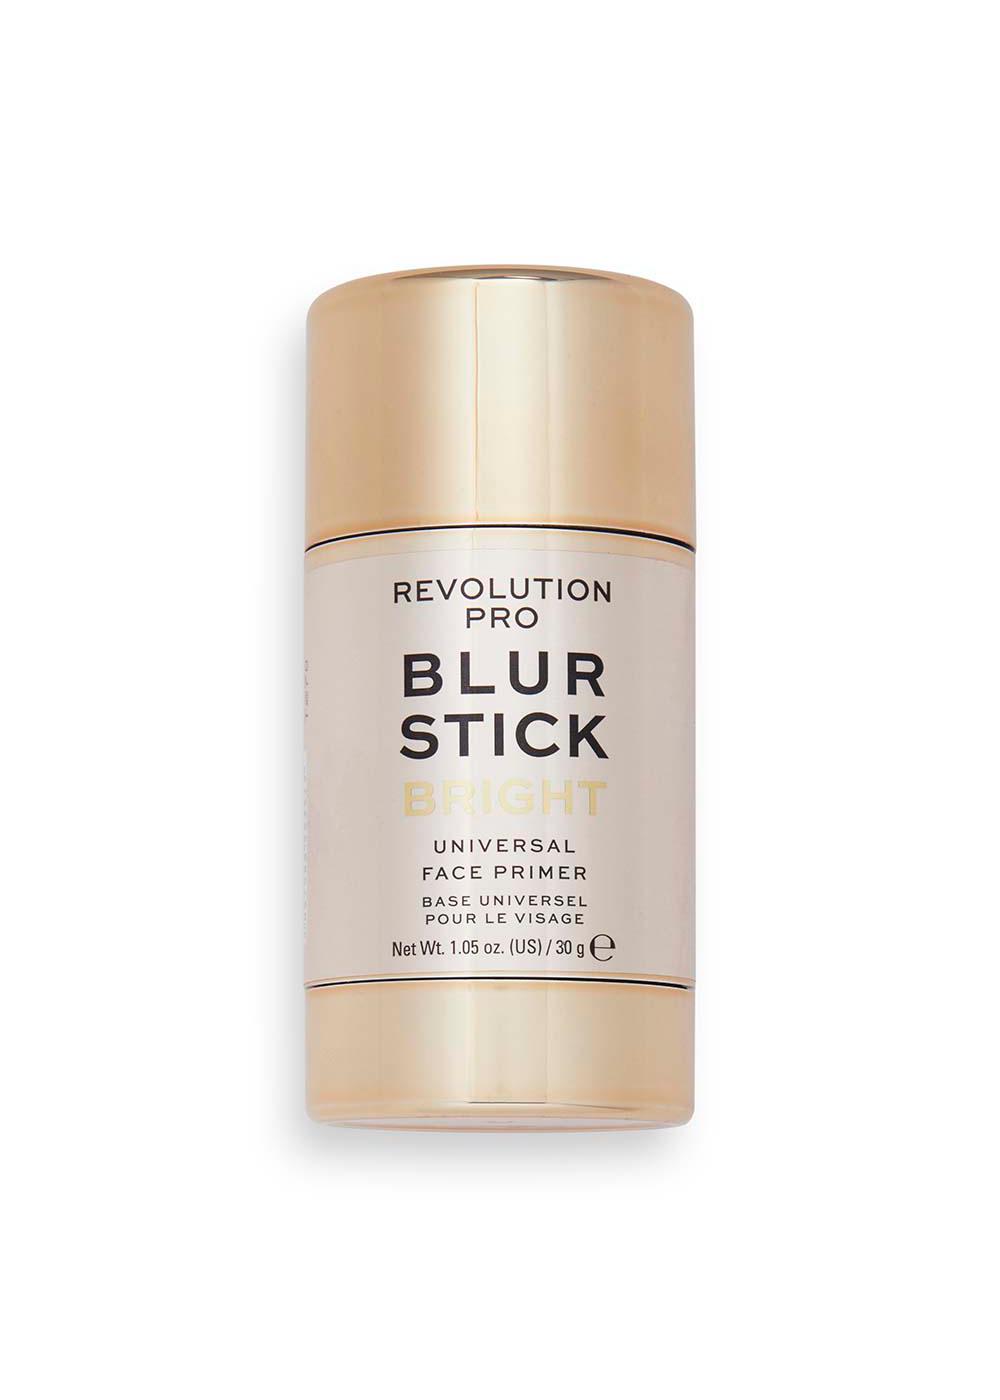 Makeup Revolution Pro Blur Stick Bright; image 1 of 3